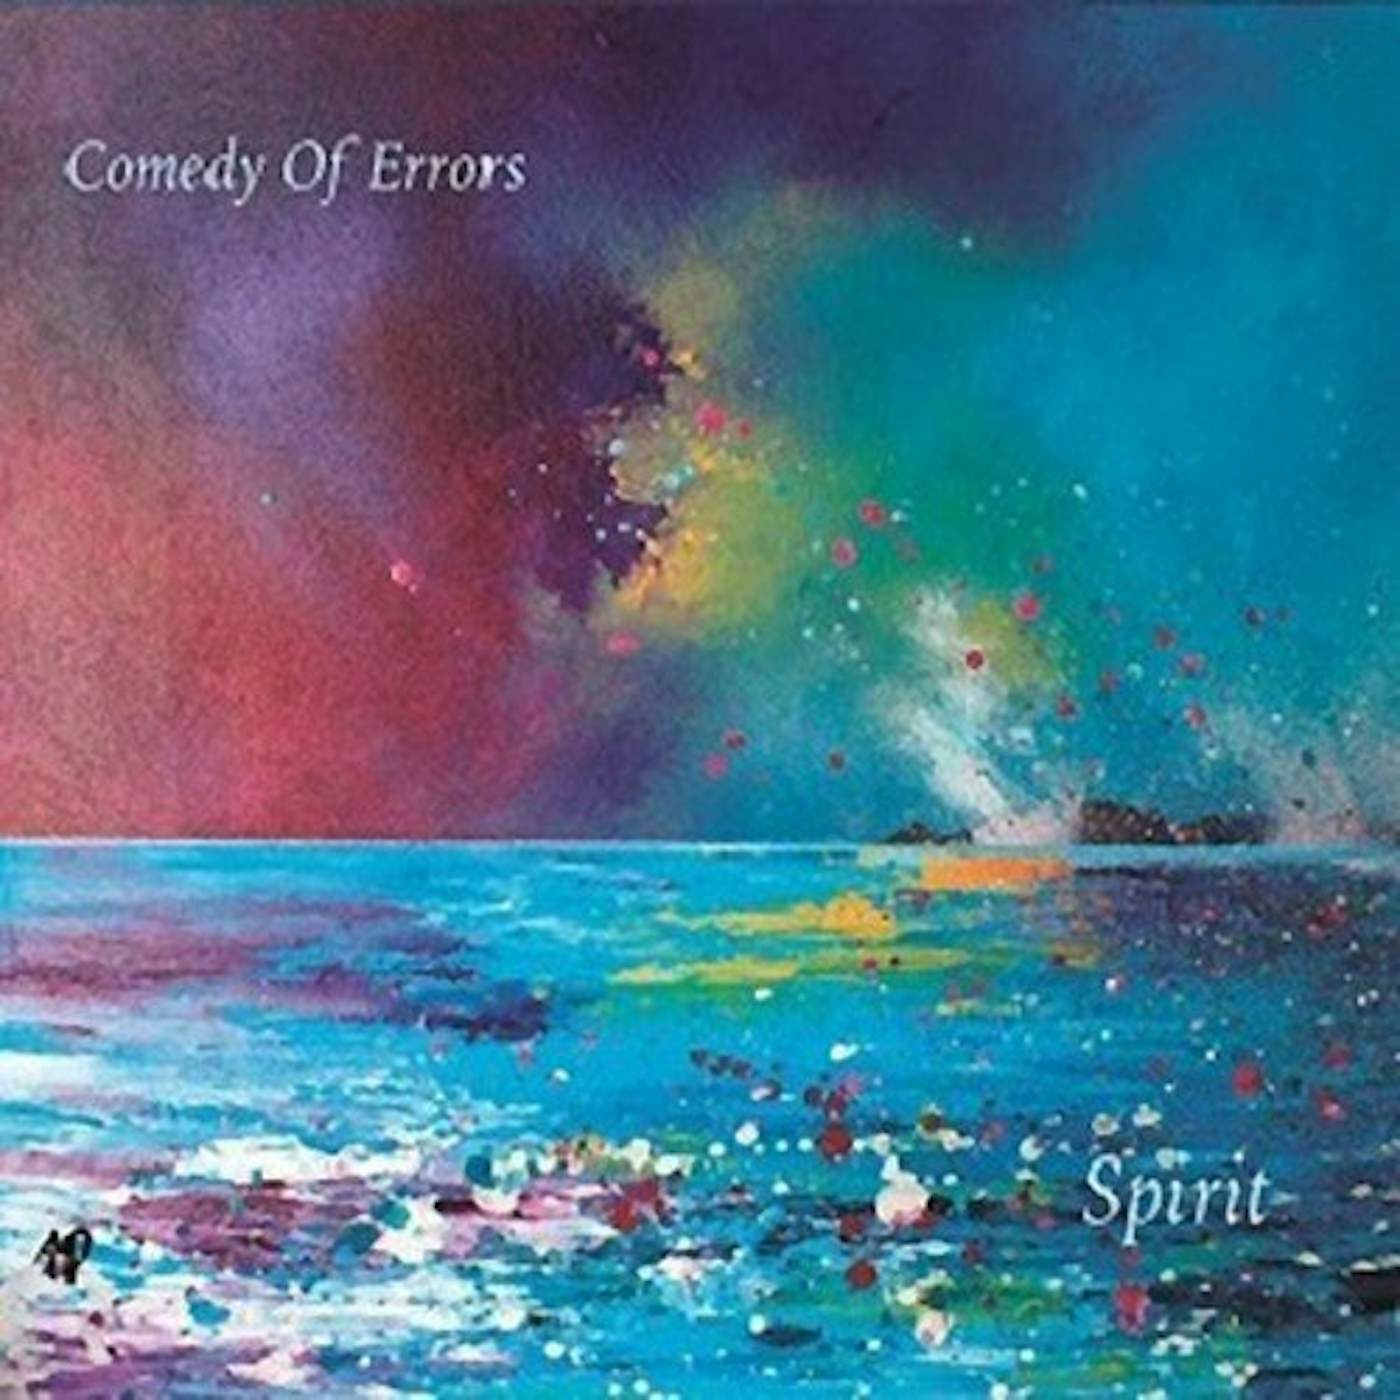 Comedy of Errors SPIRIT CD